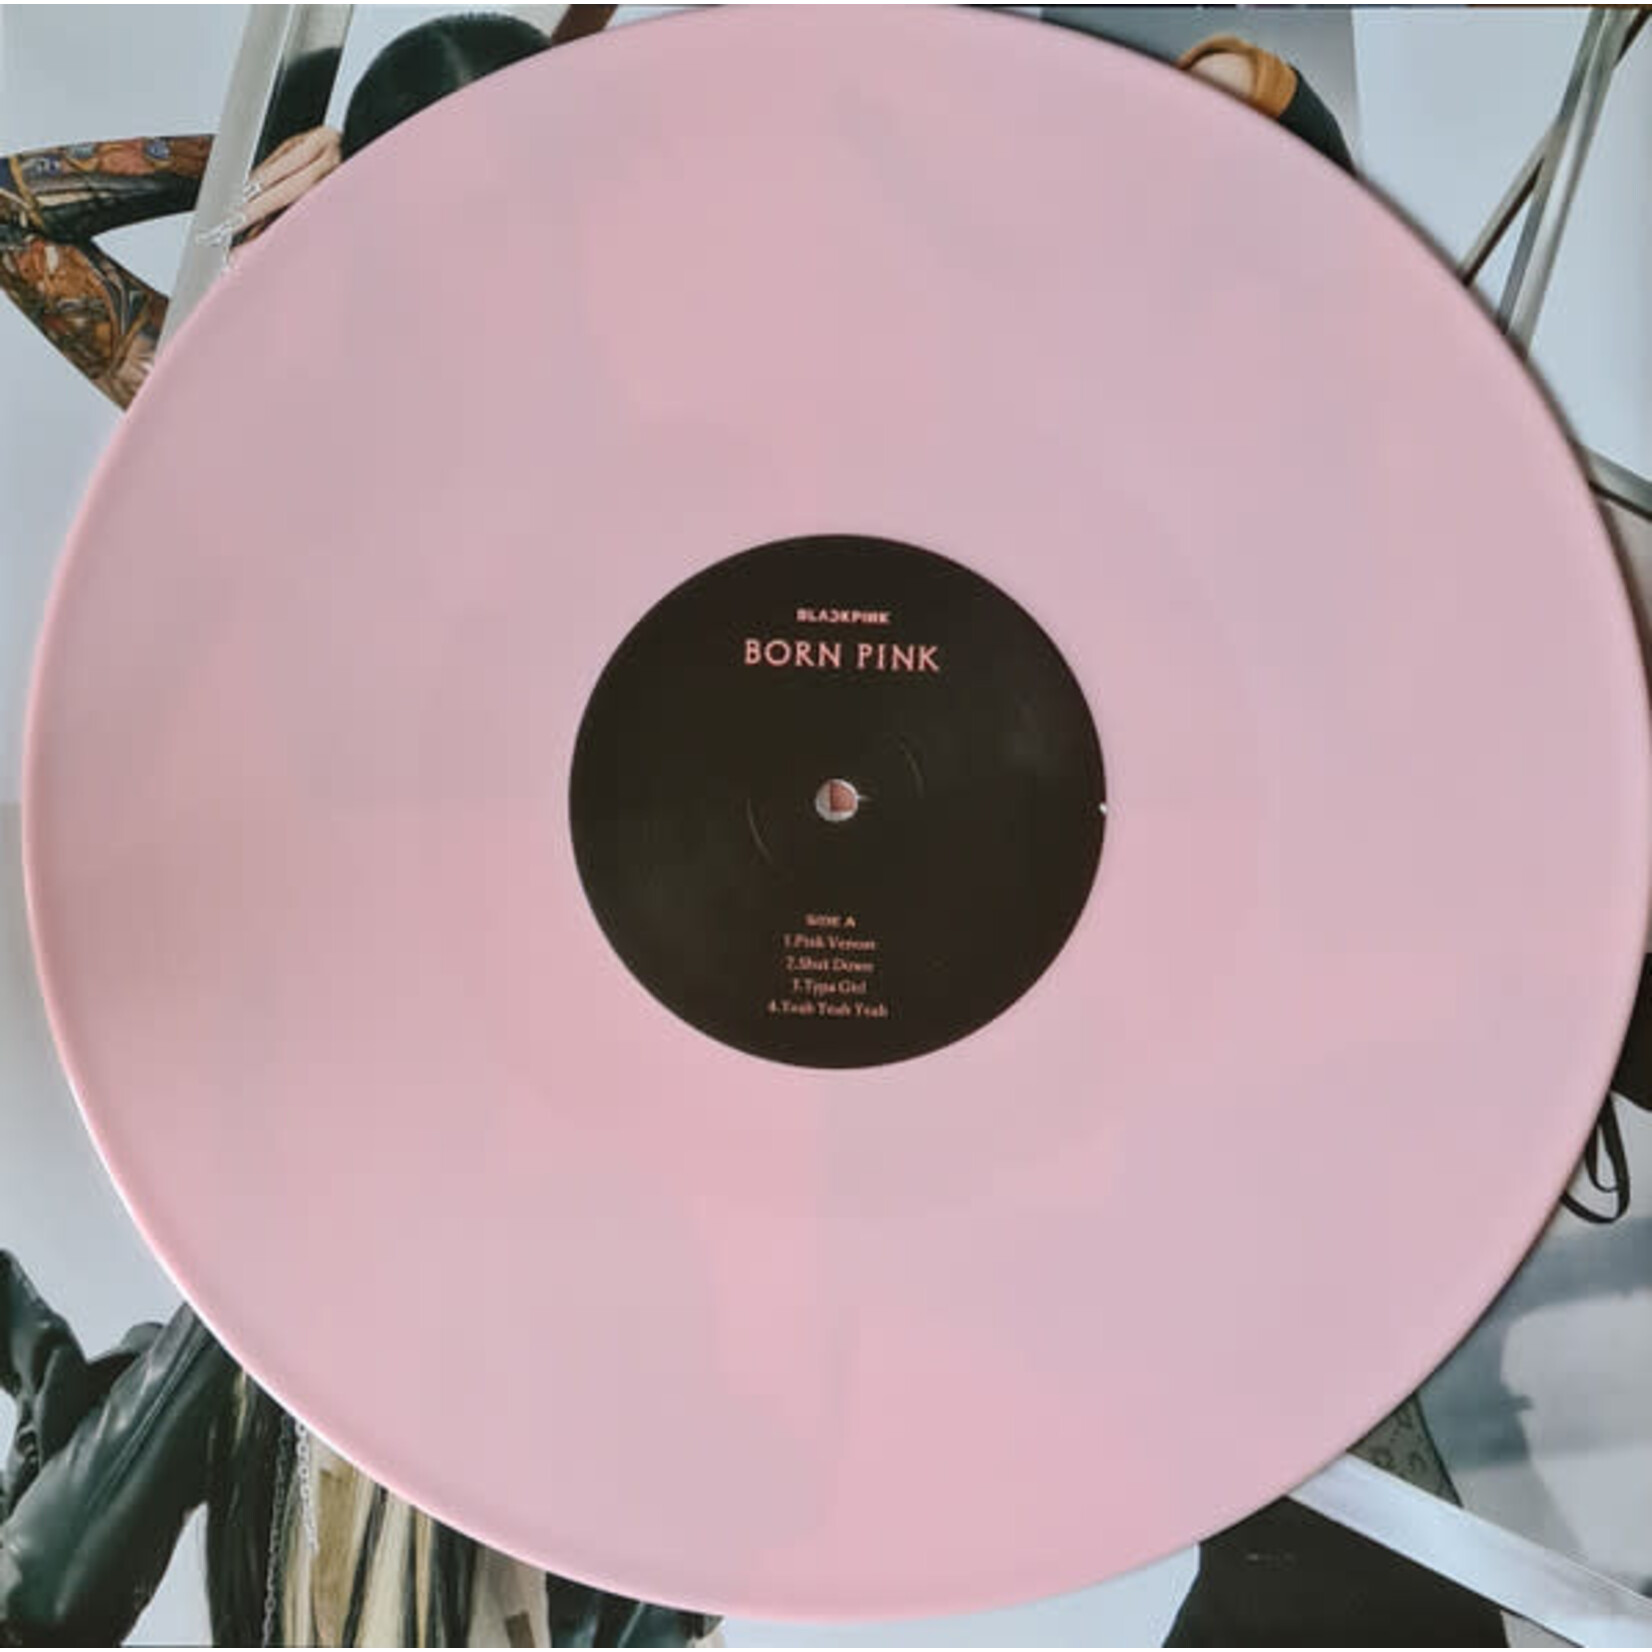 Blackpink: Born Pink (pink vinyl) [INTERSCOPE]